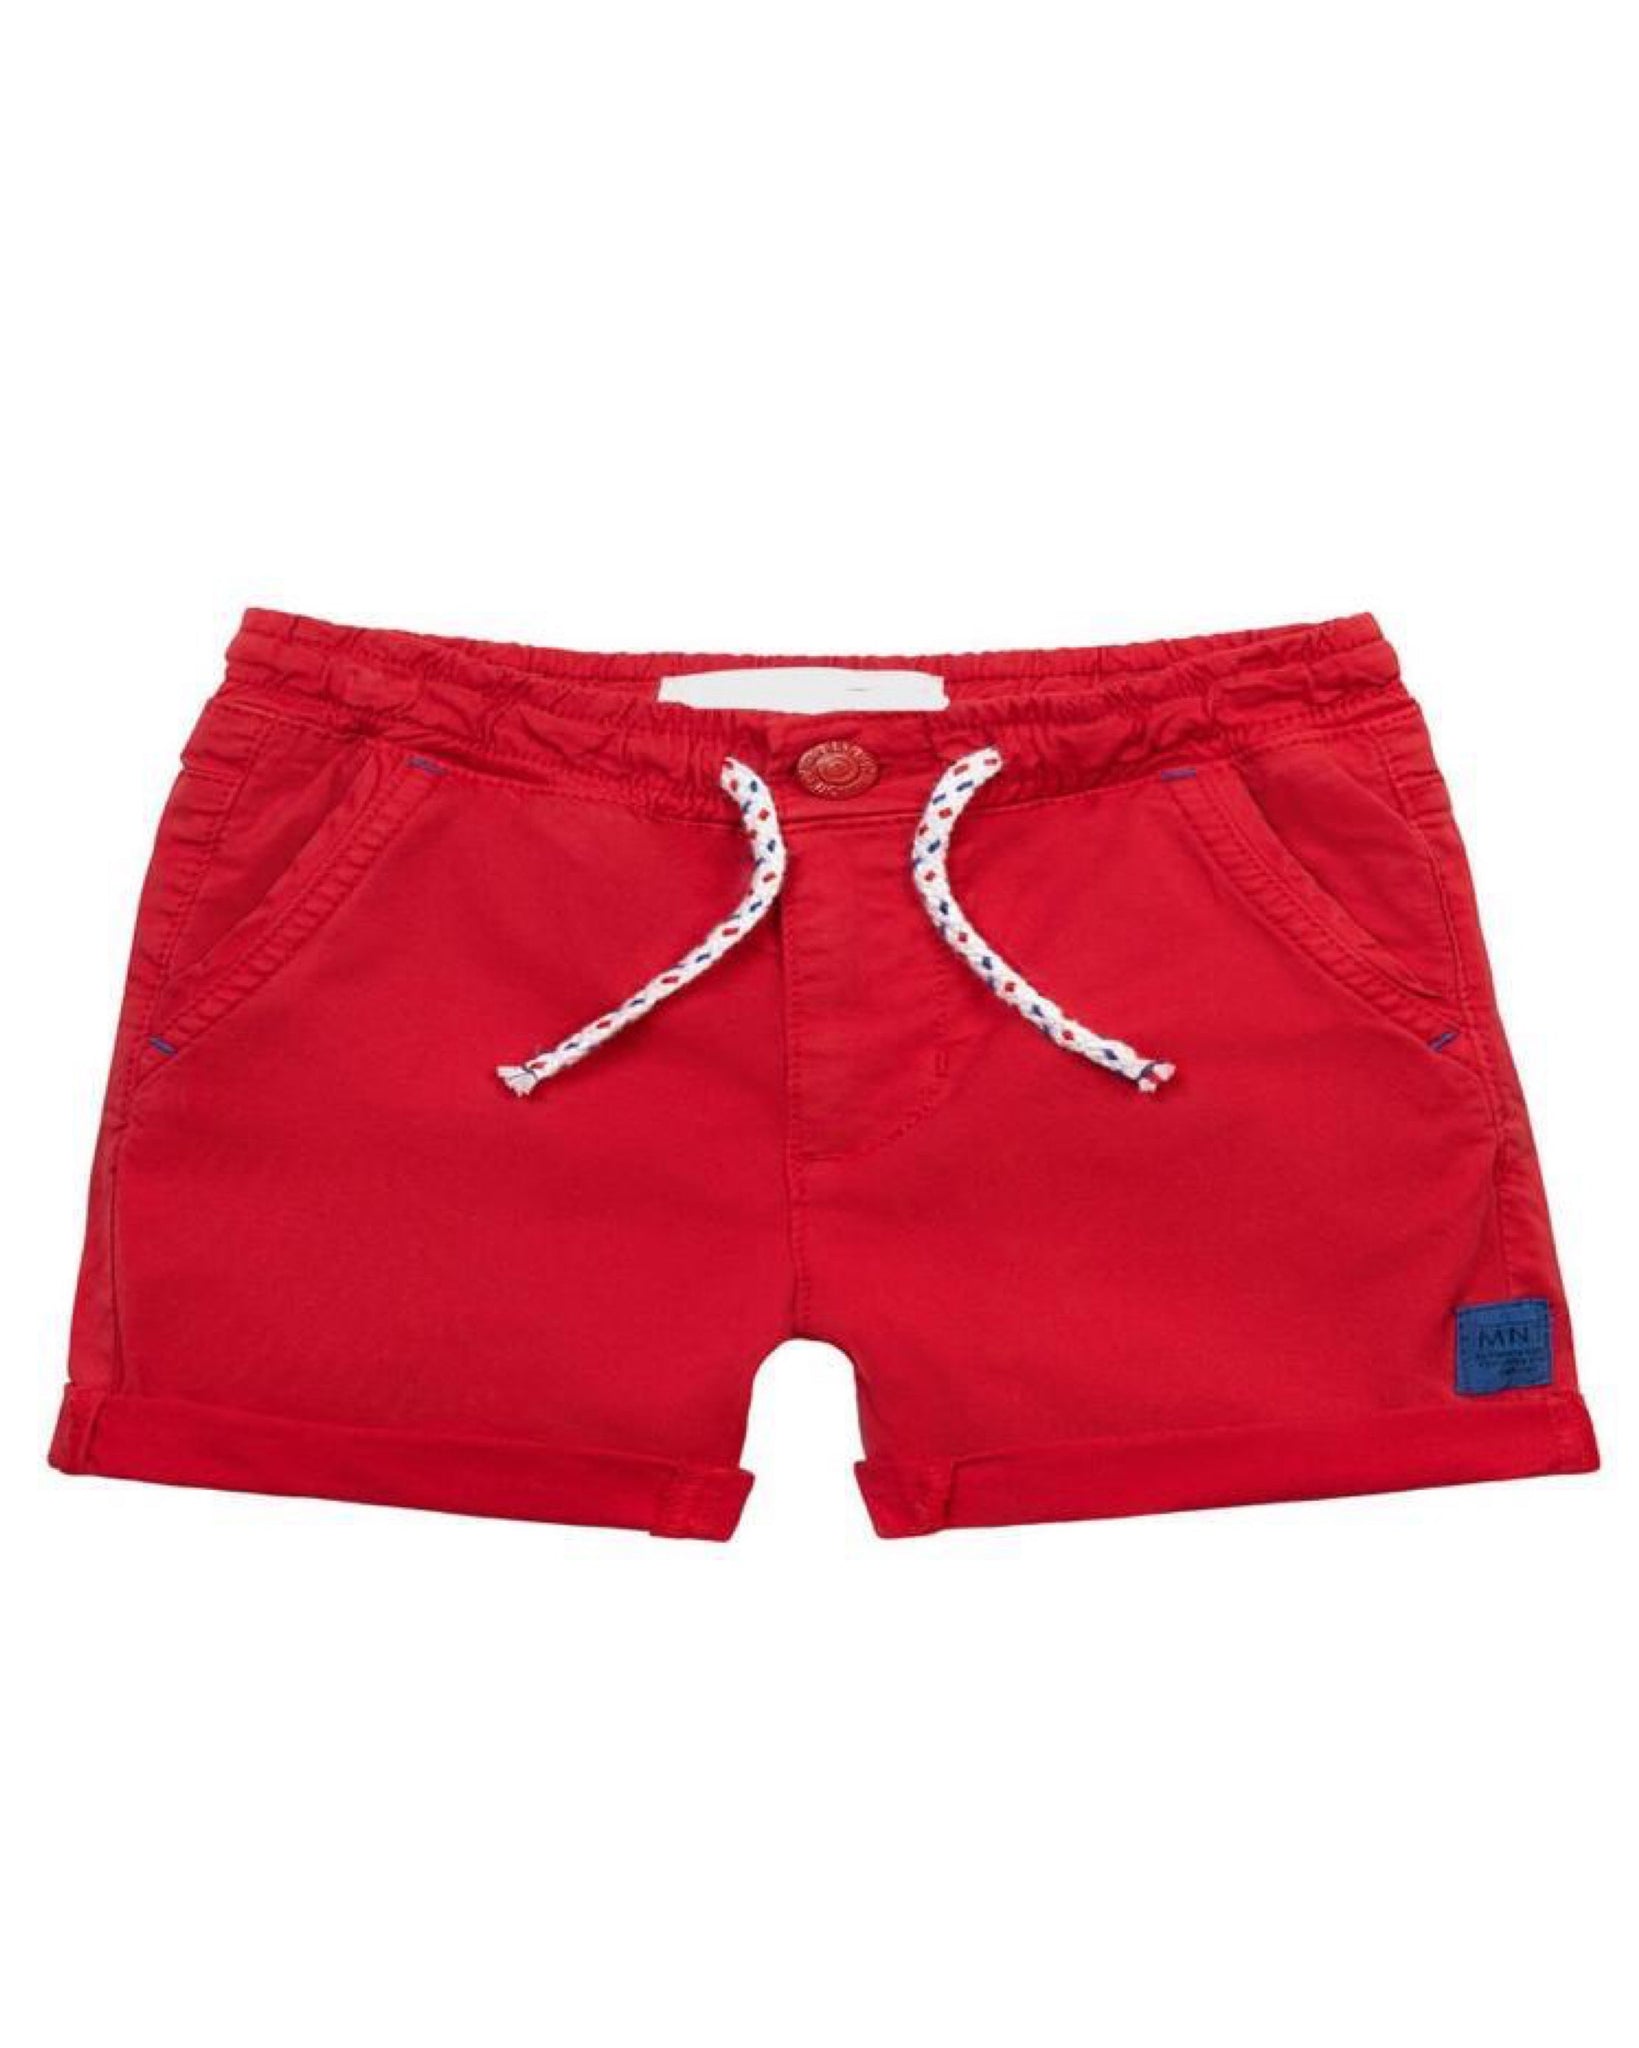 Red Elastic Waistband Shorts: 6-7Y